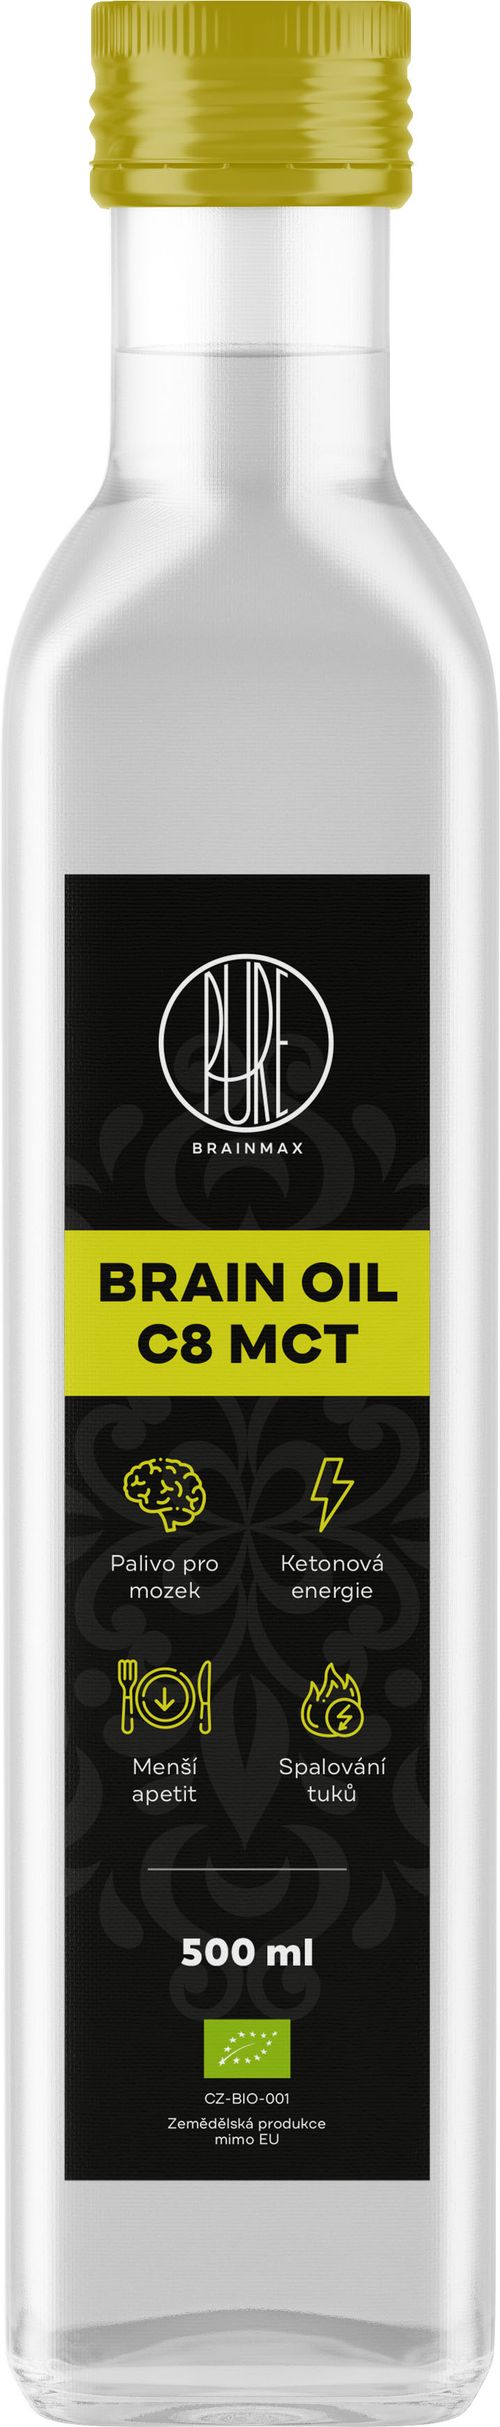 Brainmax Pure Brain Oil C8 MCT, 500 ml *CZ-BIO-001 certifikát